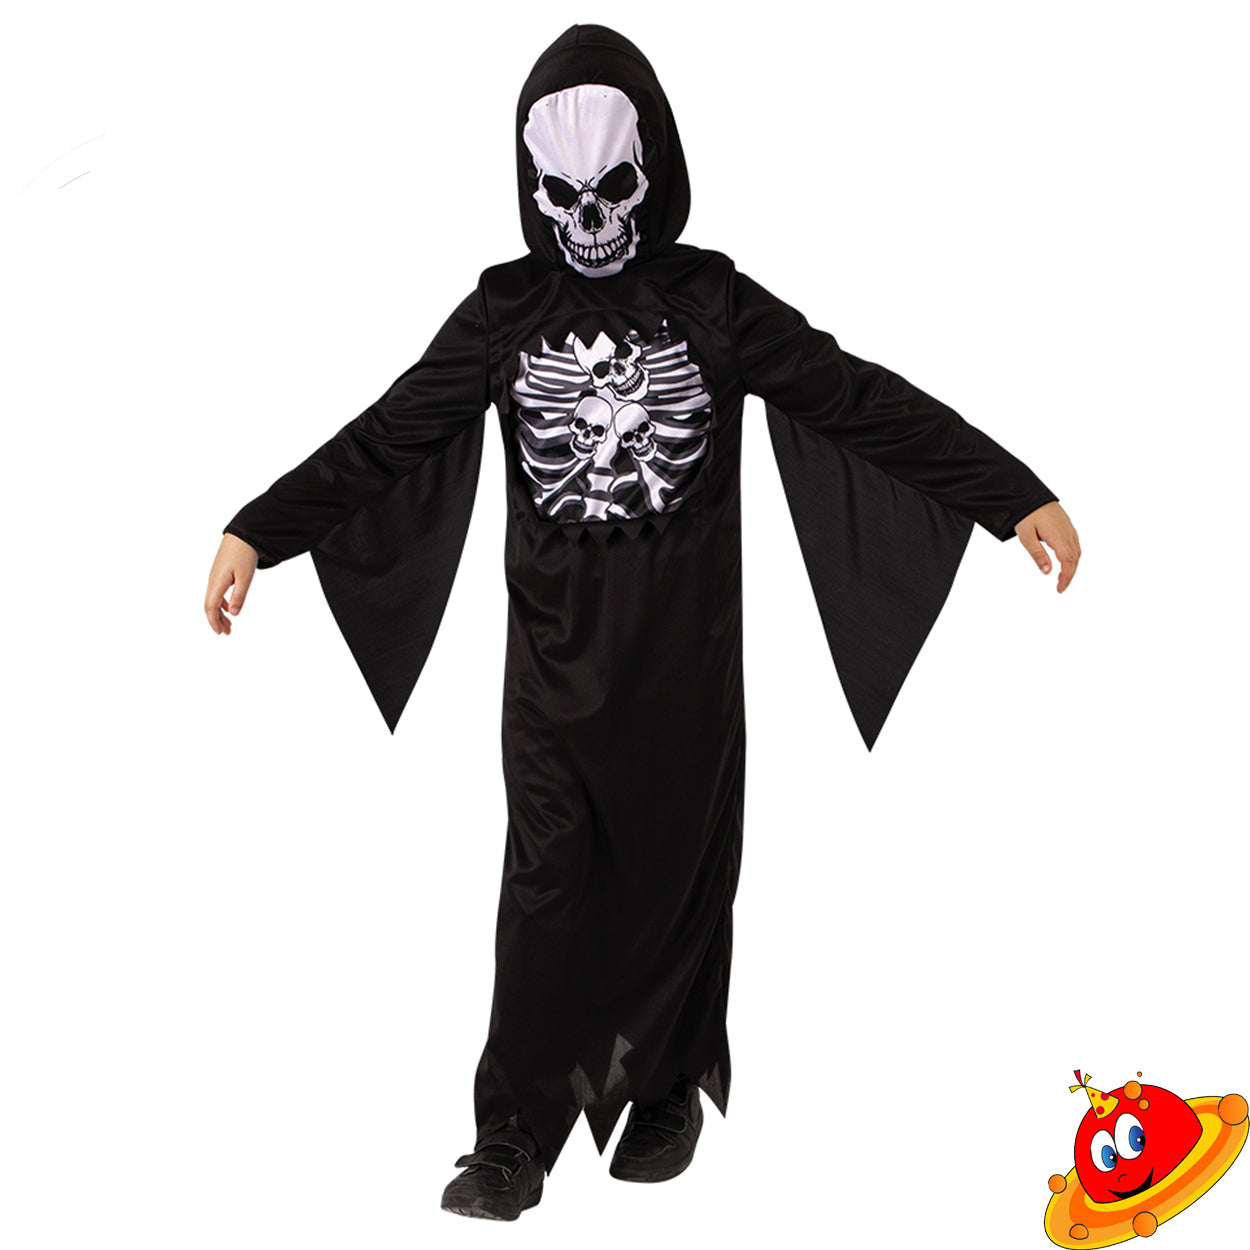 Carnevale Costume Halloween Scheletro morte nera Bambino